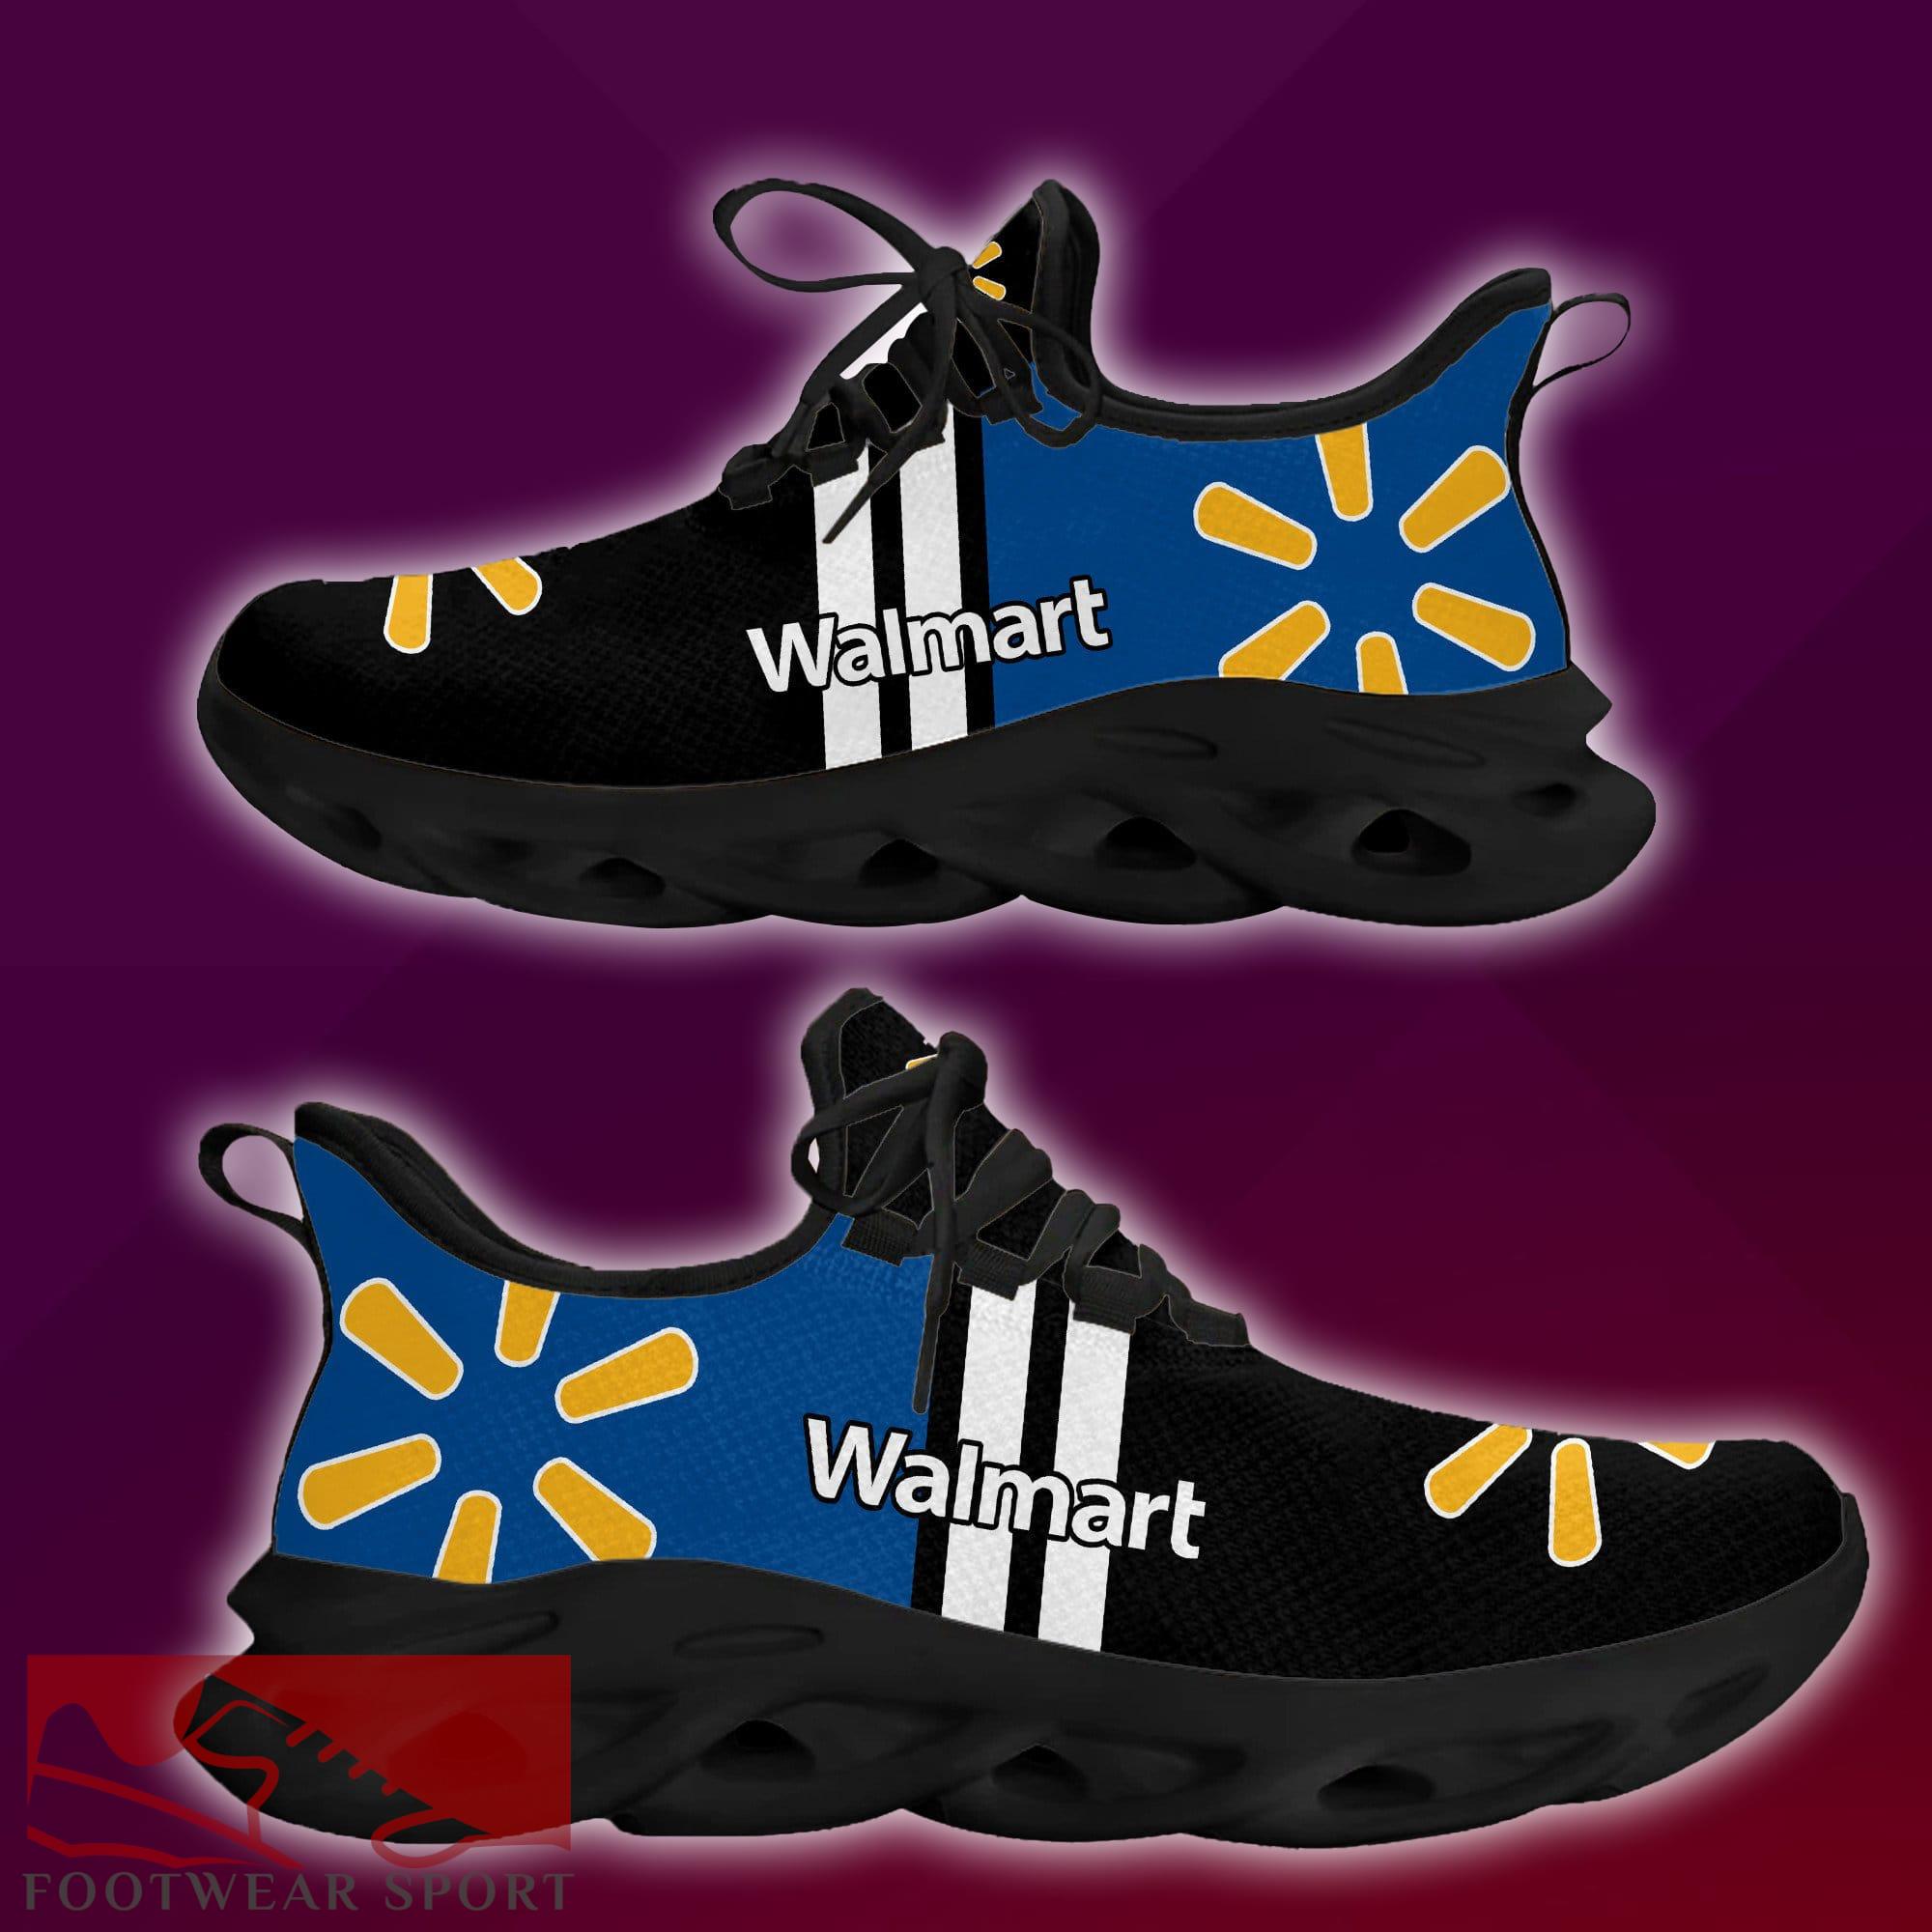 WALMART Brand New Logo Max Soul Sneakers Performance Sport Shoes Gift - WALMART New Brand Chunky Shoes Style Max Soul Sneakers Photo 1